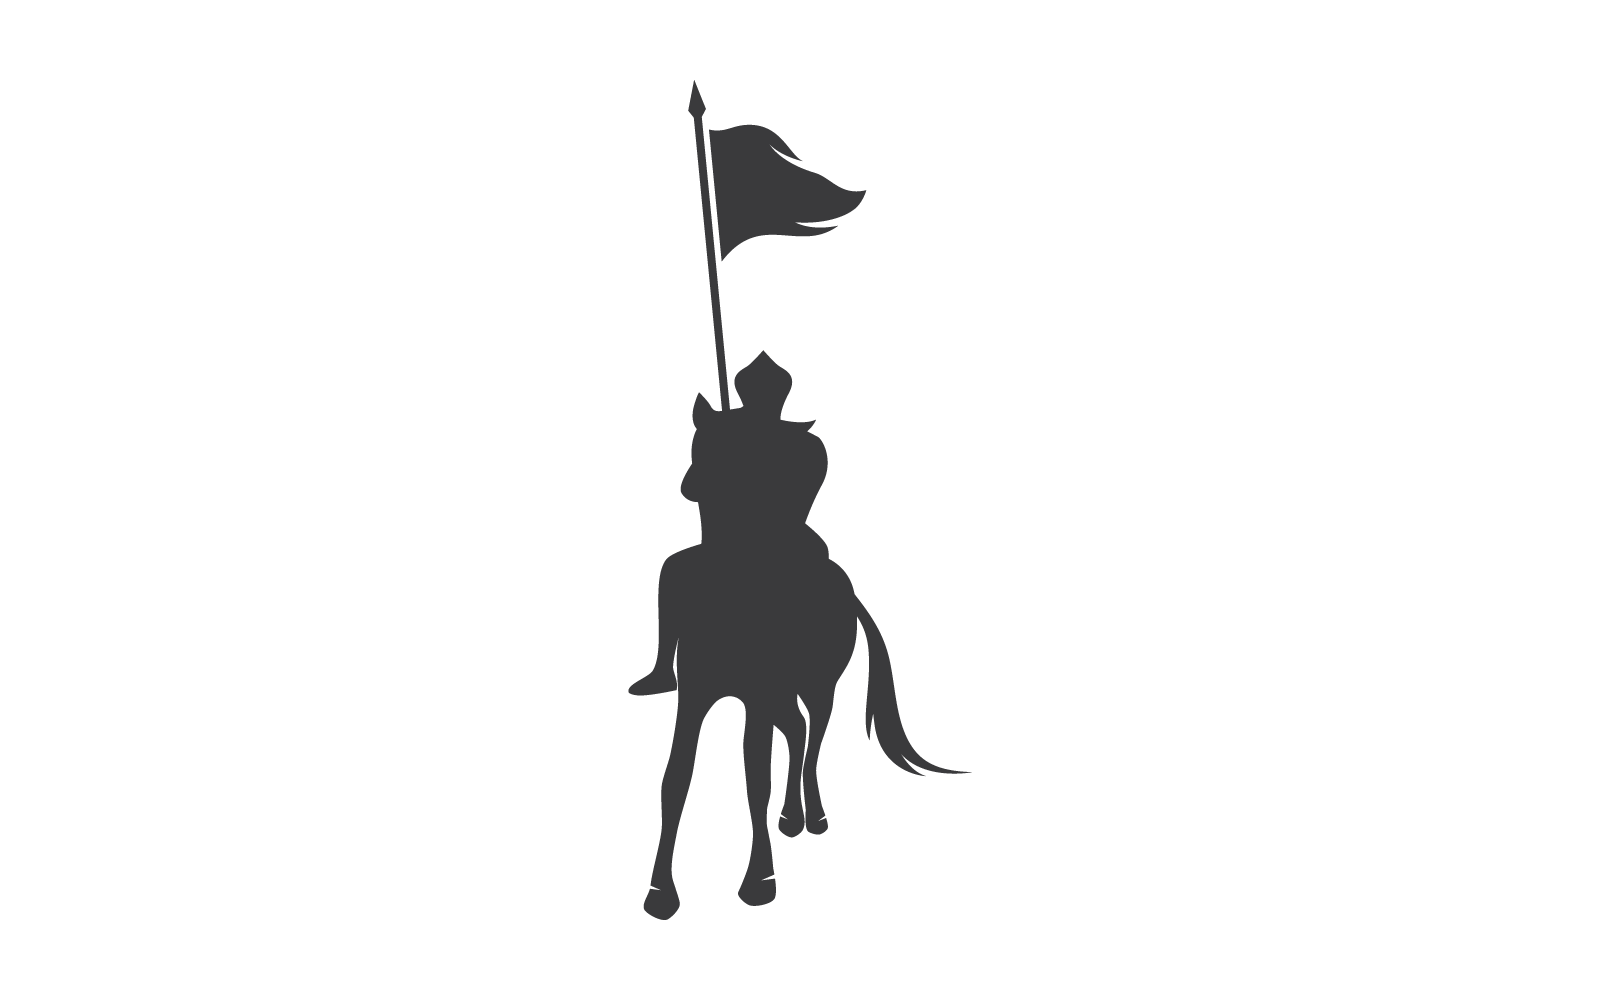 Horse knight hero logo vector illustration template